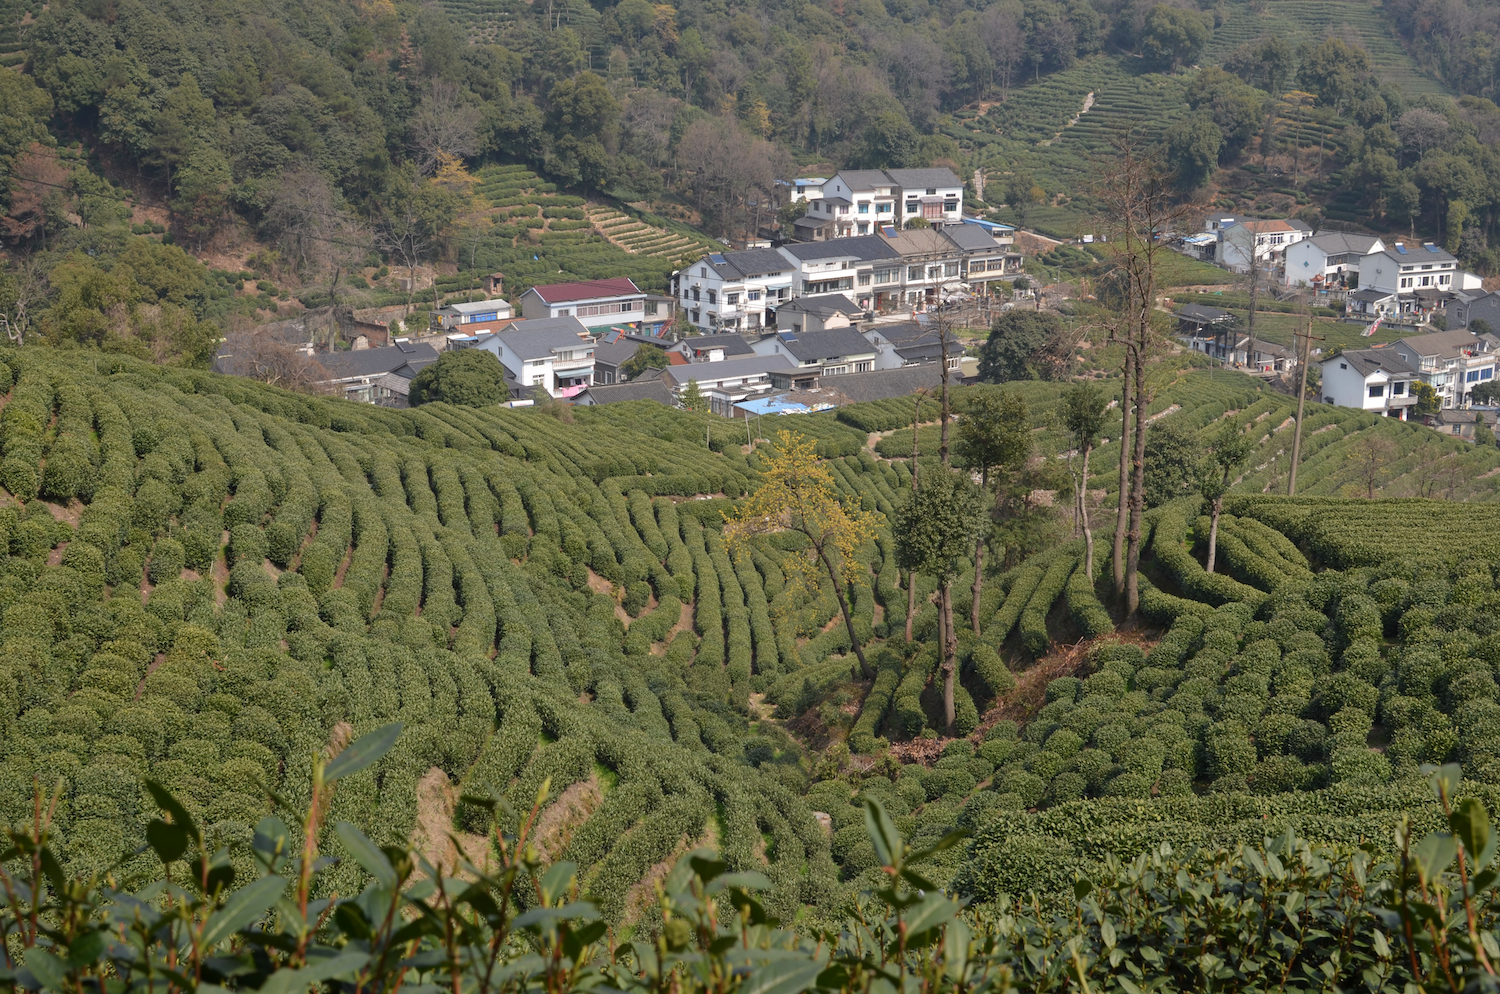 Tea Plantation, Hangzhou